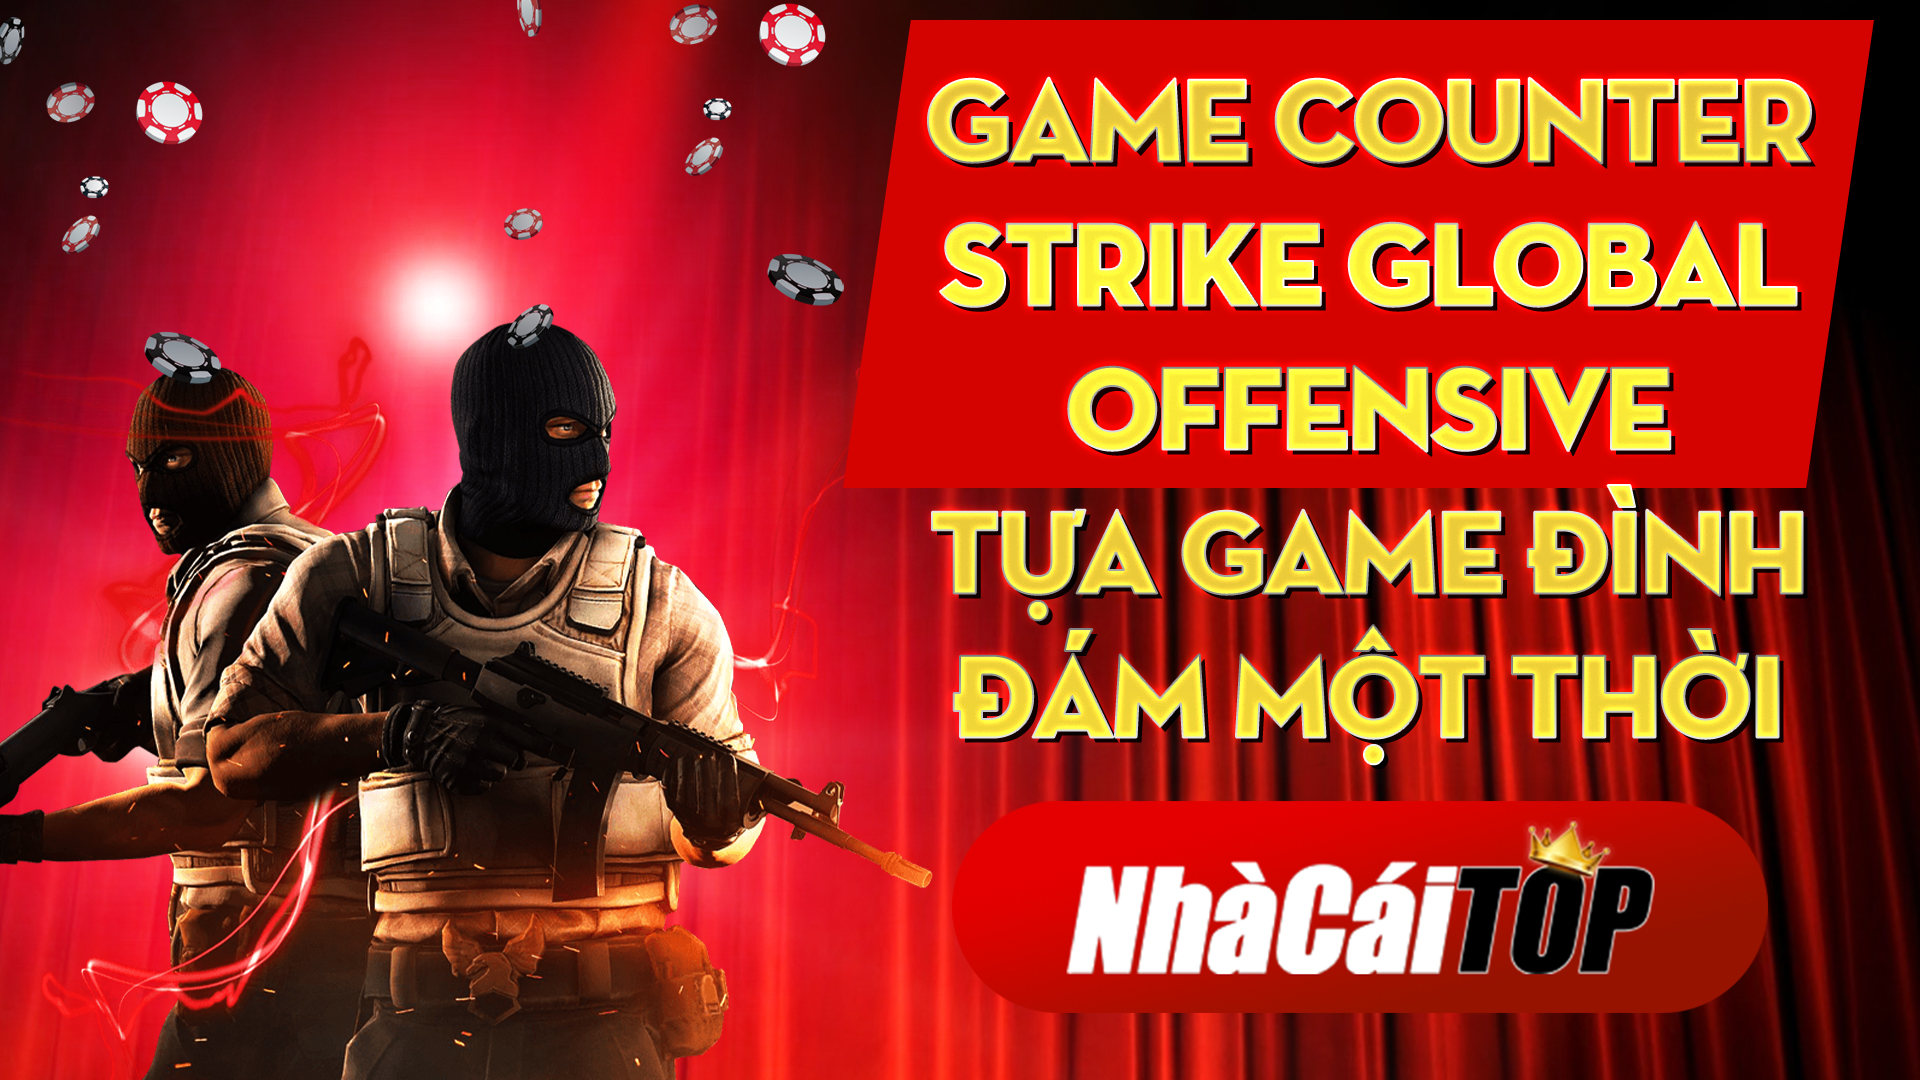 Game Counter Strike Globgal Offensive